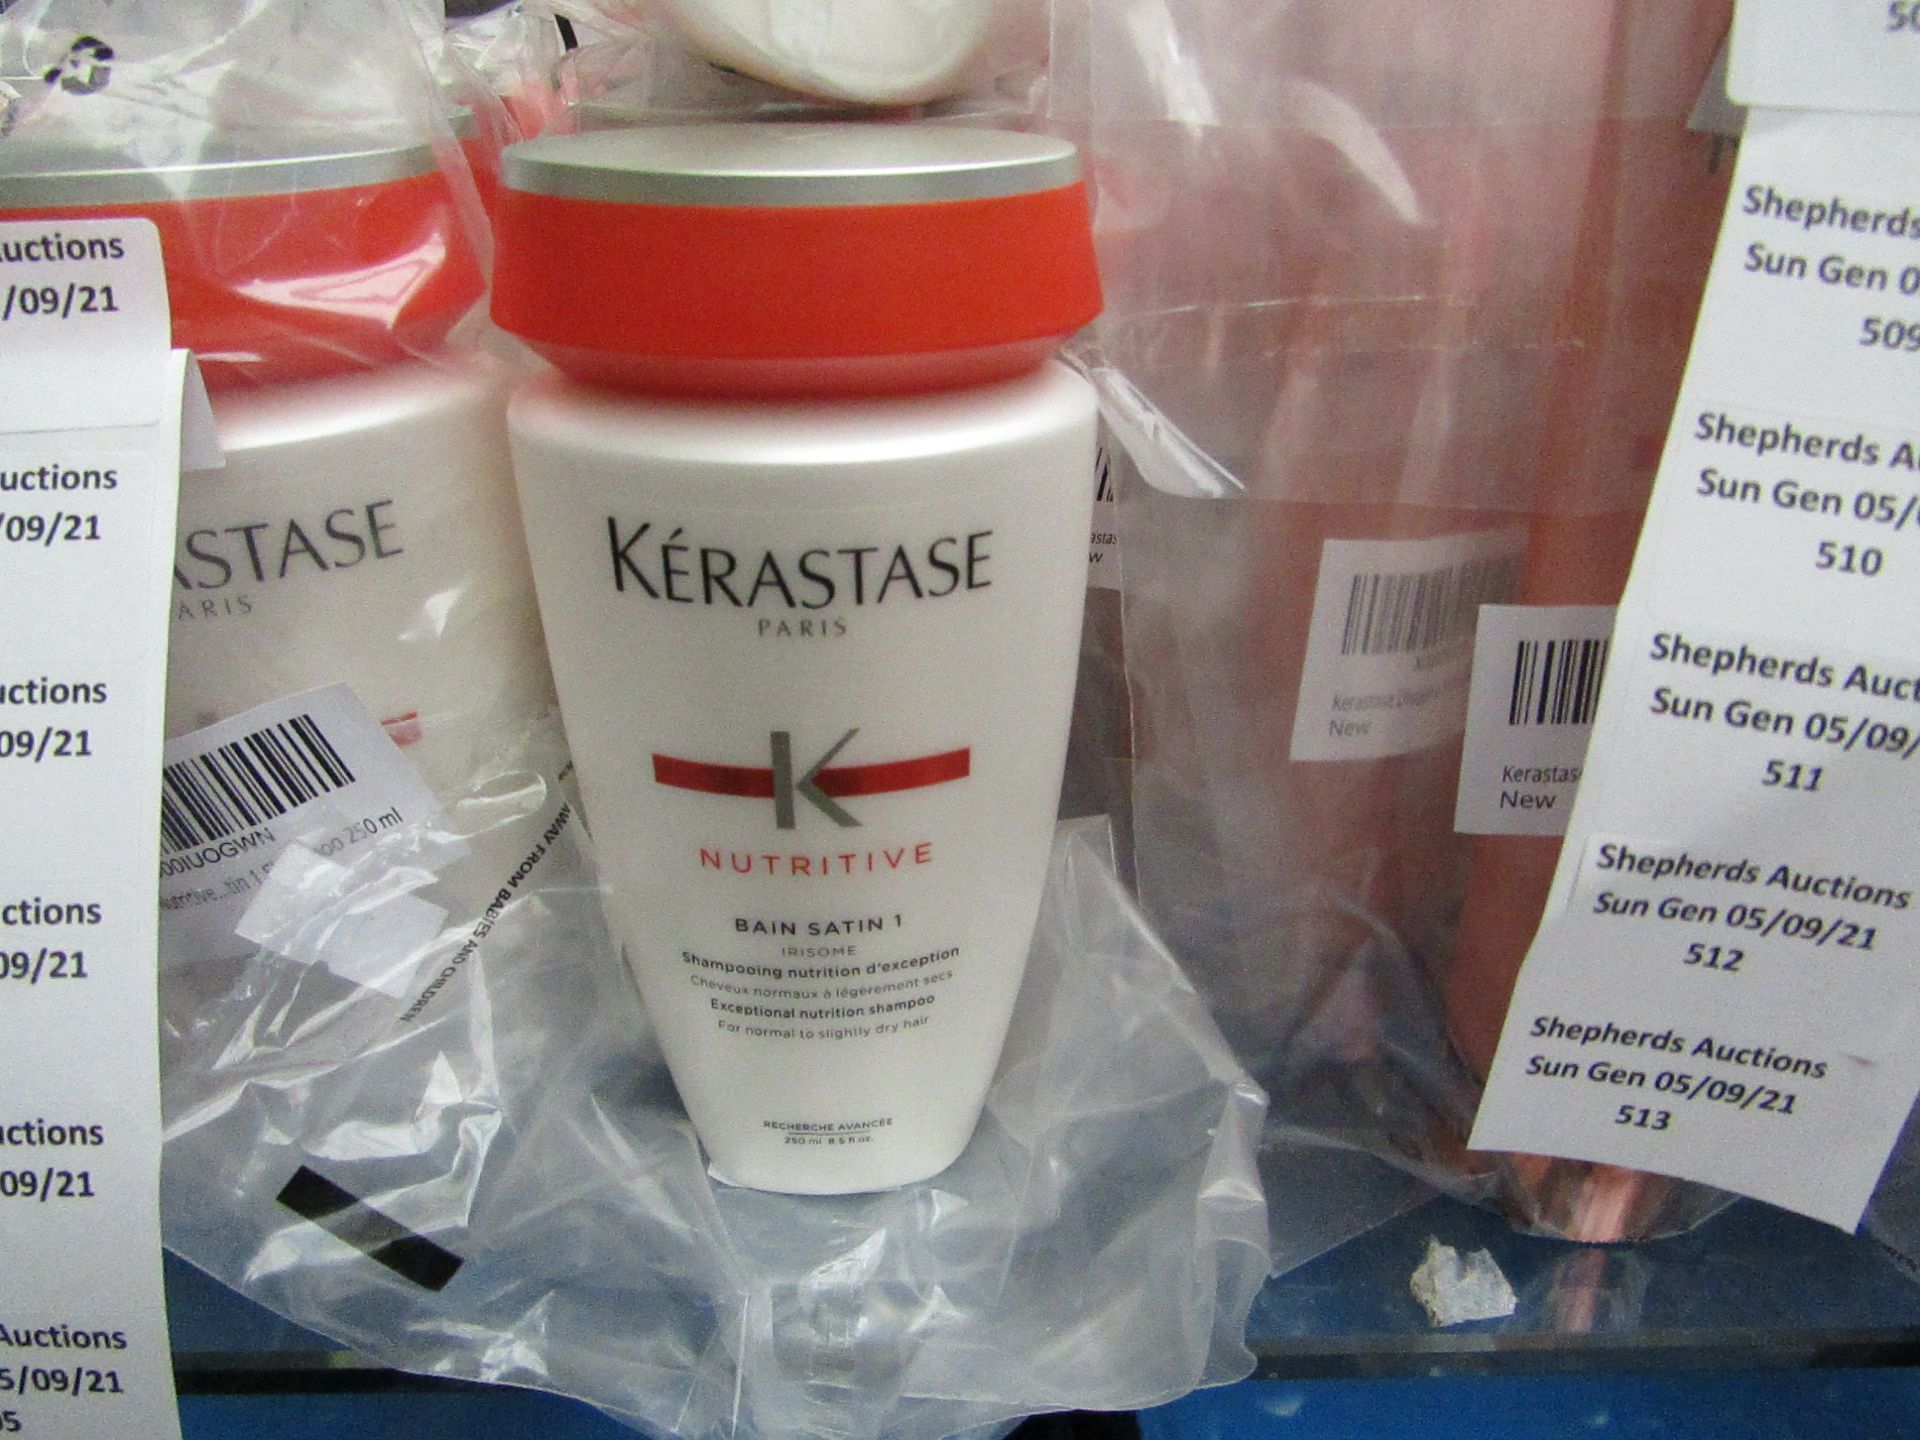 Kerastase - Paris Nutritive Bain Satin 1 Shampoo, 250ml - New & Packaged - RRP £21.10.